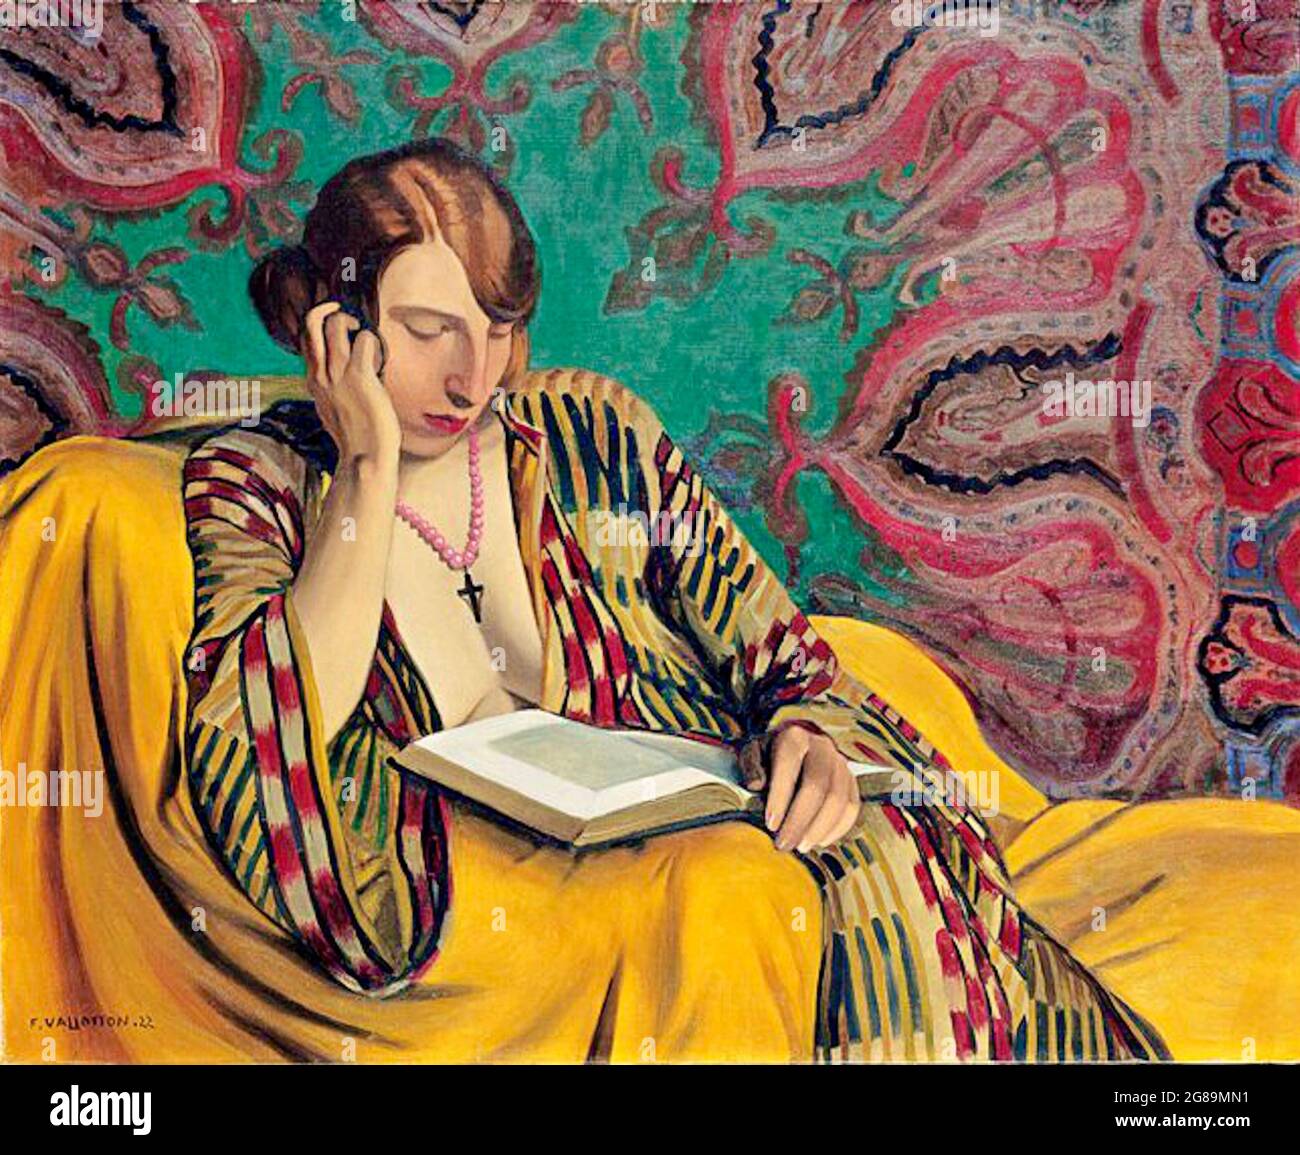 Félix Vallotton artwork entitled La Liseuse or Reading Light. A seated woman reads a book. Ornate mandala style wallpaper adorns the walls. Stock Photo